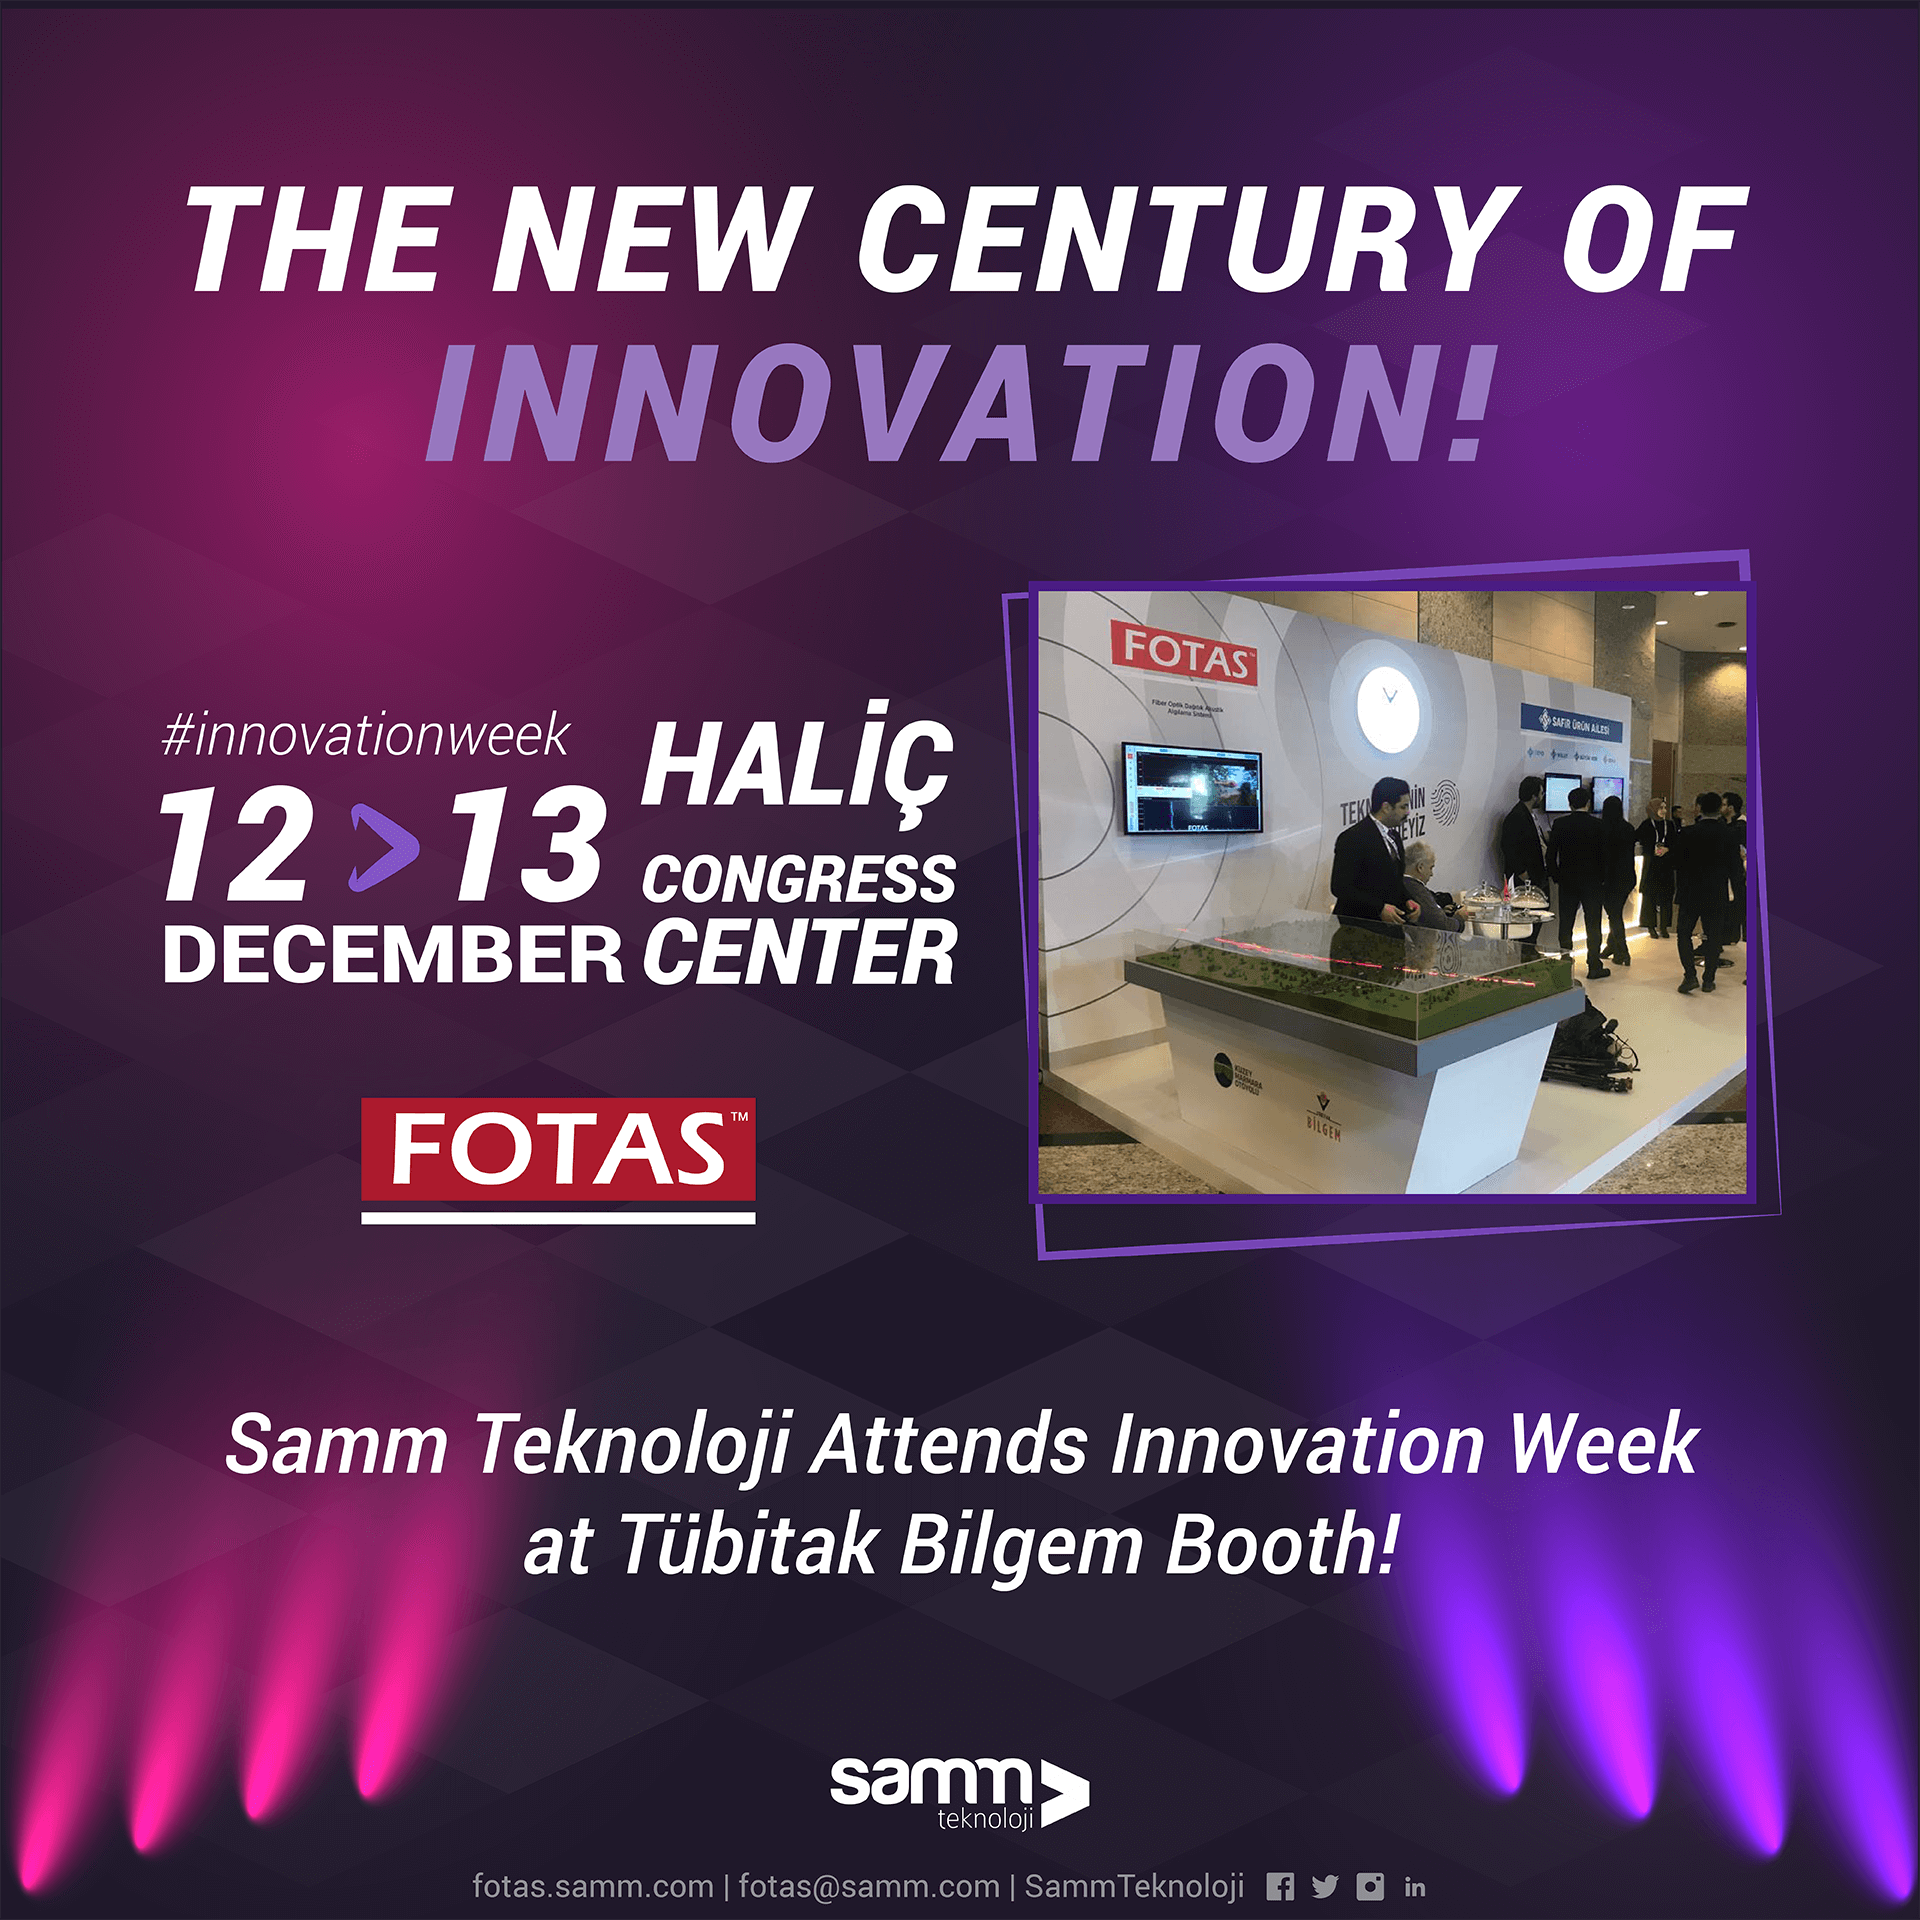 Samm Teknoloji Attends Innovation Week at Tübitak Bilgem Booth!